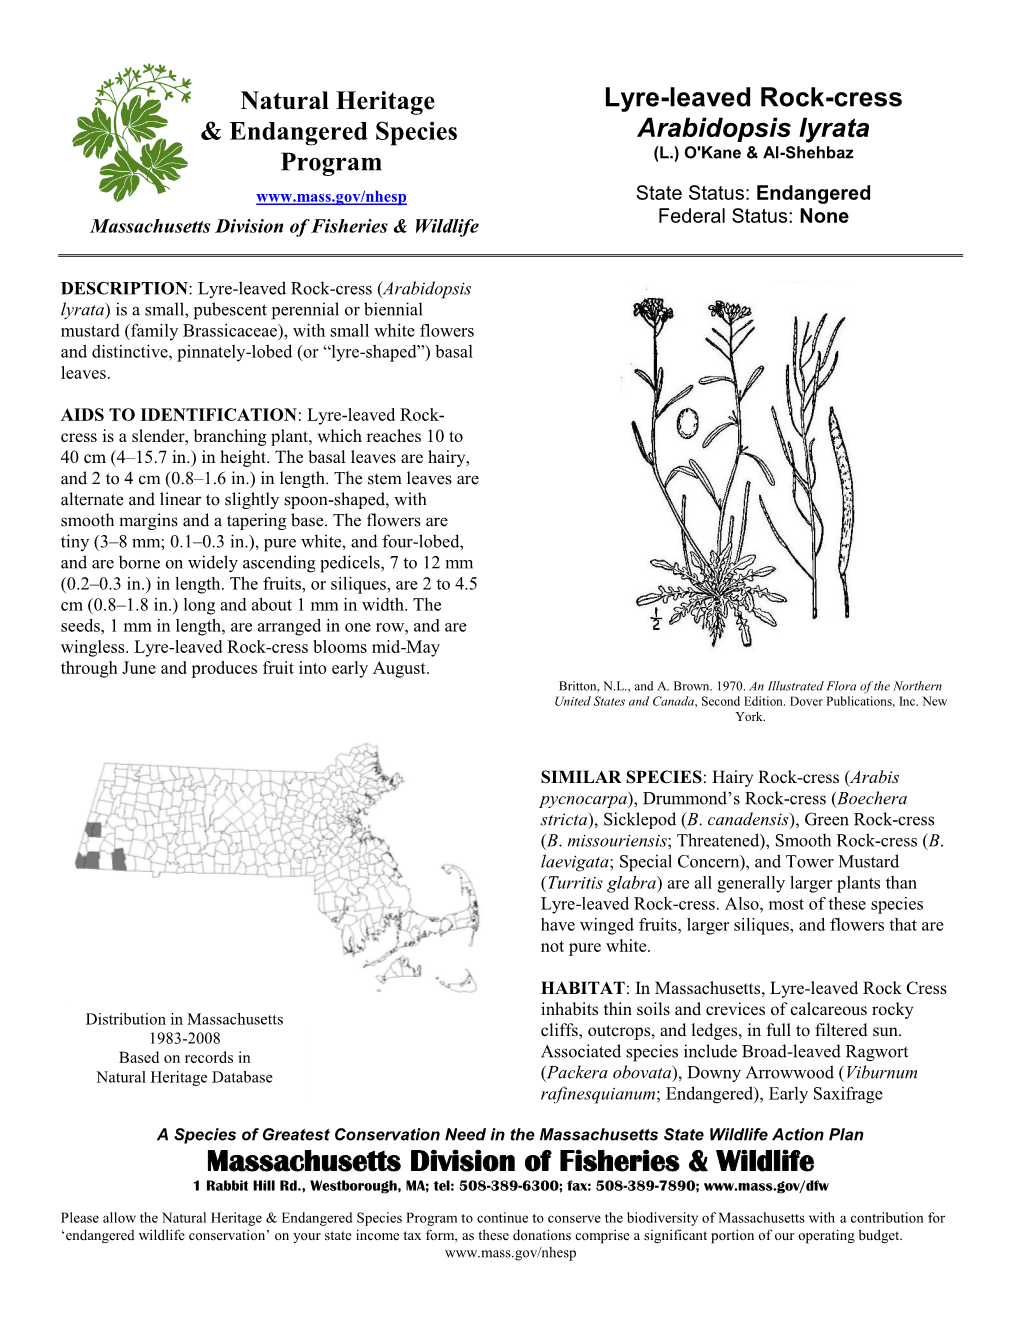 Lyre-Leaved Rock-Cress Arabidopsis Lyrata